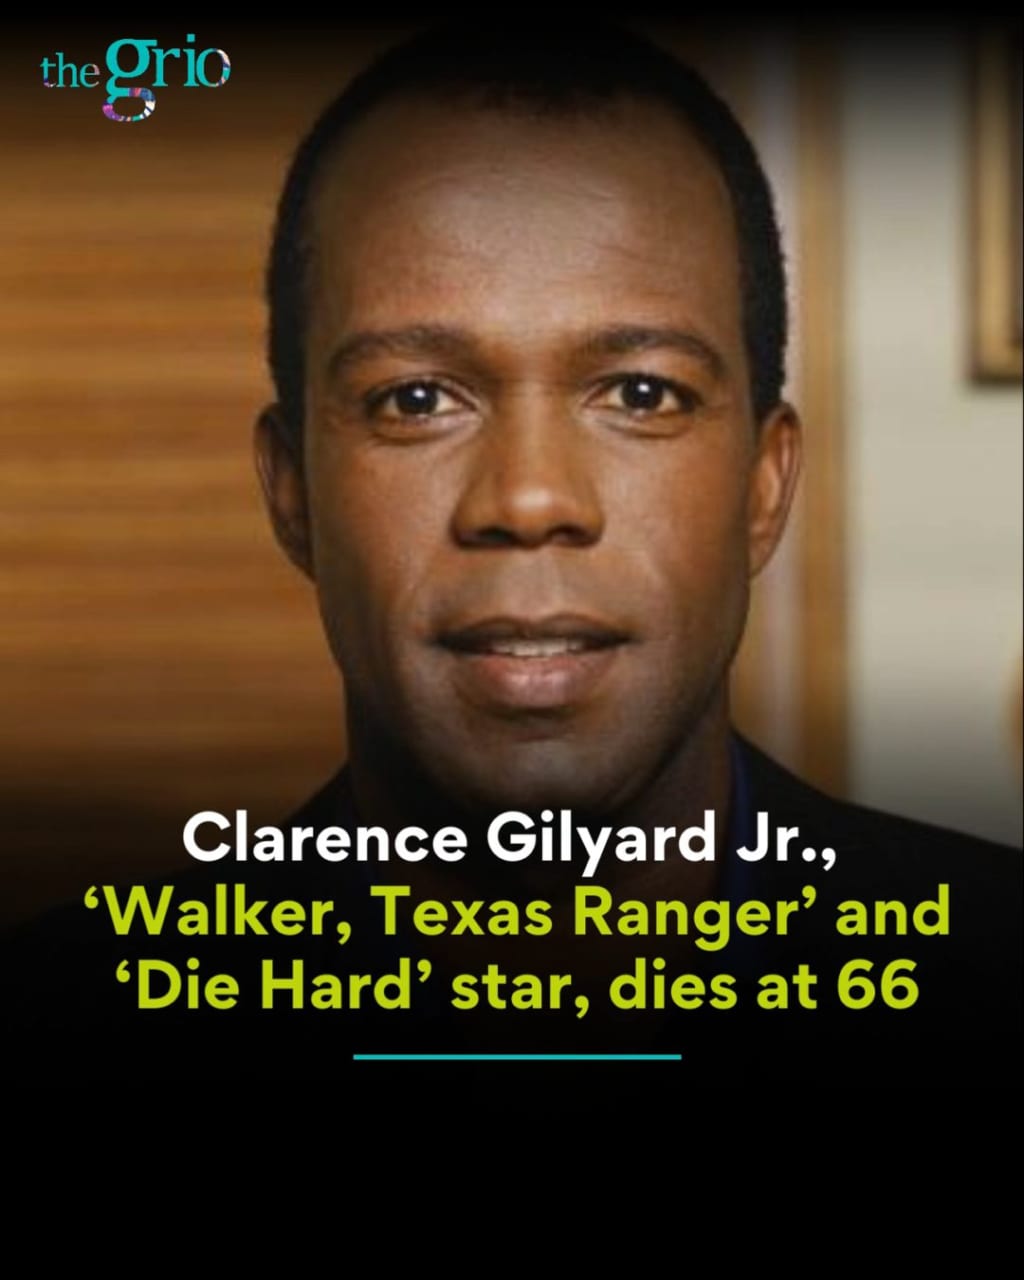 Walker, Texas Ranger star Clarence Gilyard Jr. dies